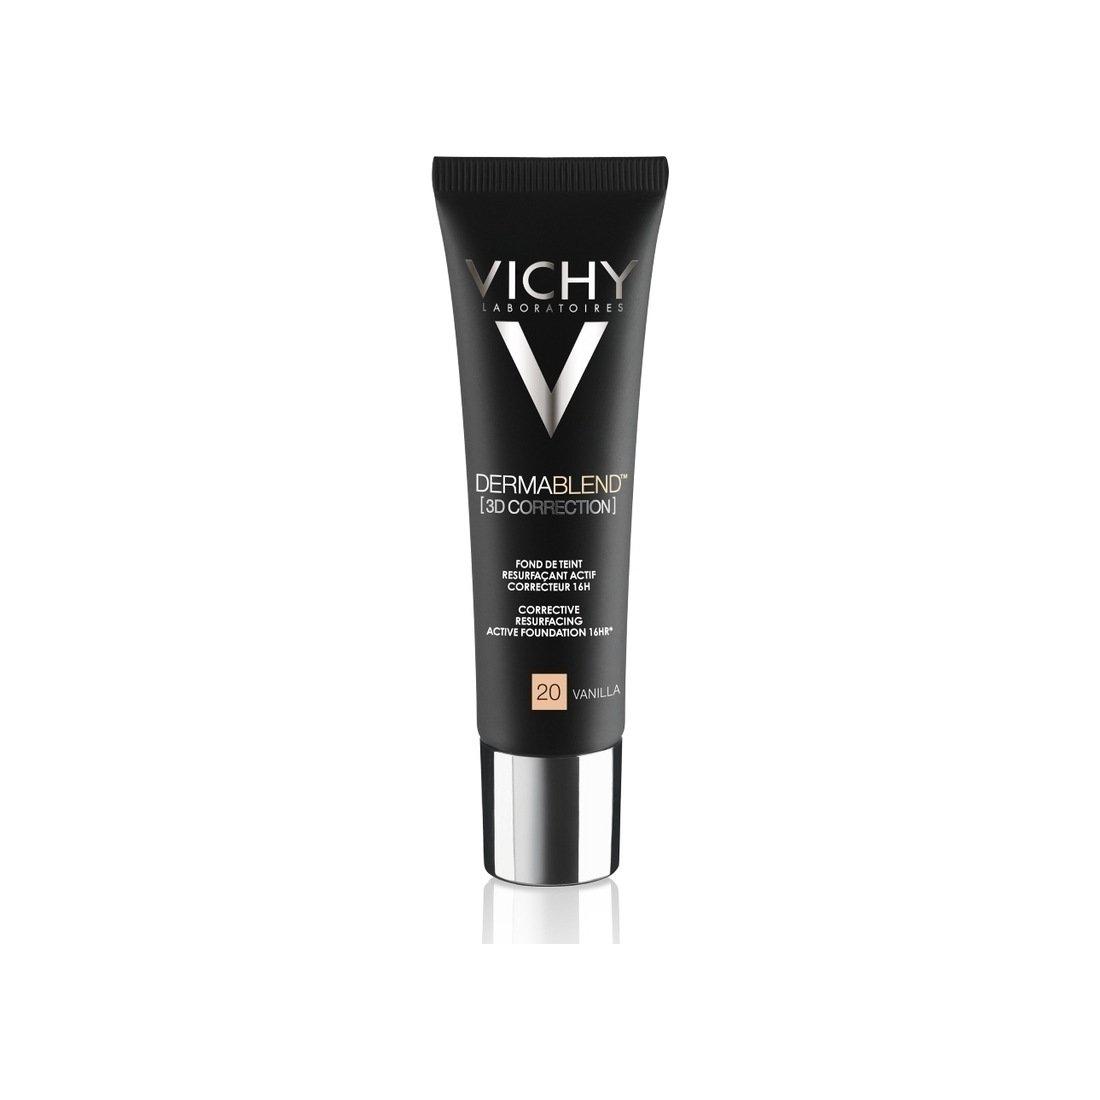 Vichy Dermablend 3D Correction Corrective Resurfacing Active Foundation 16HR 20 Vanilla SPF25 30mL